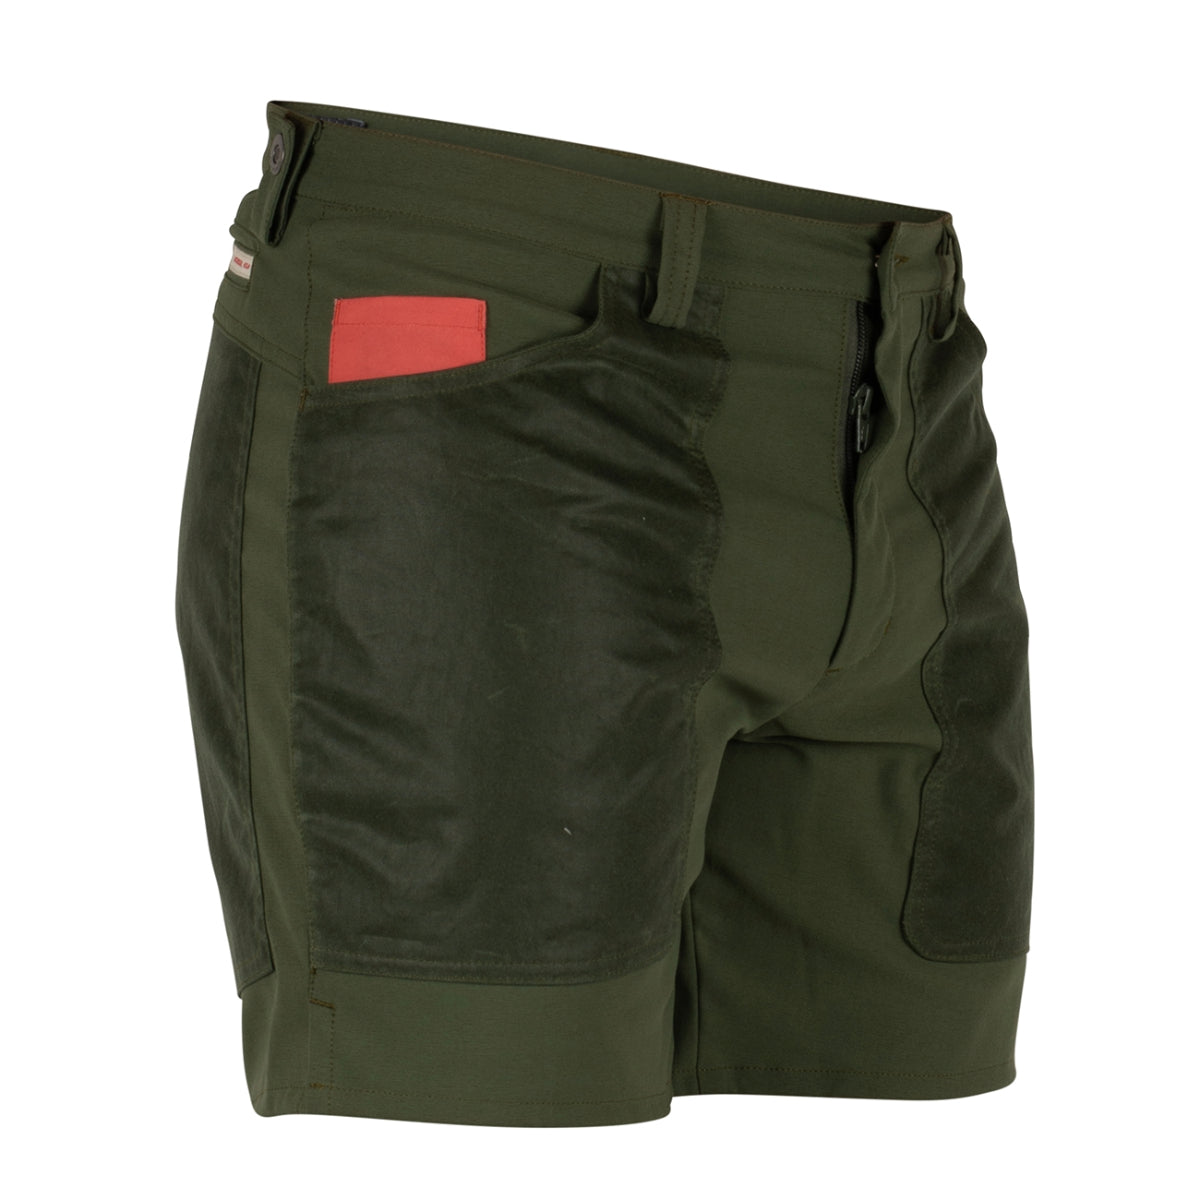 Amundsen Sports - Men's 7 Incher Field Shorts - Spruce Green / Green